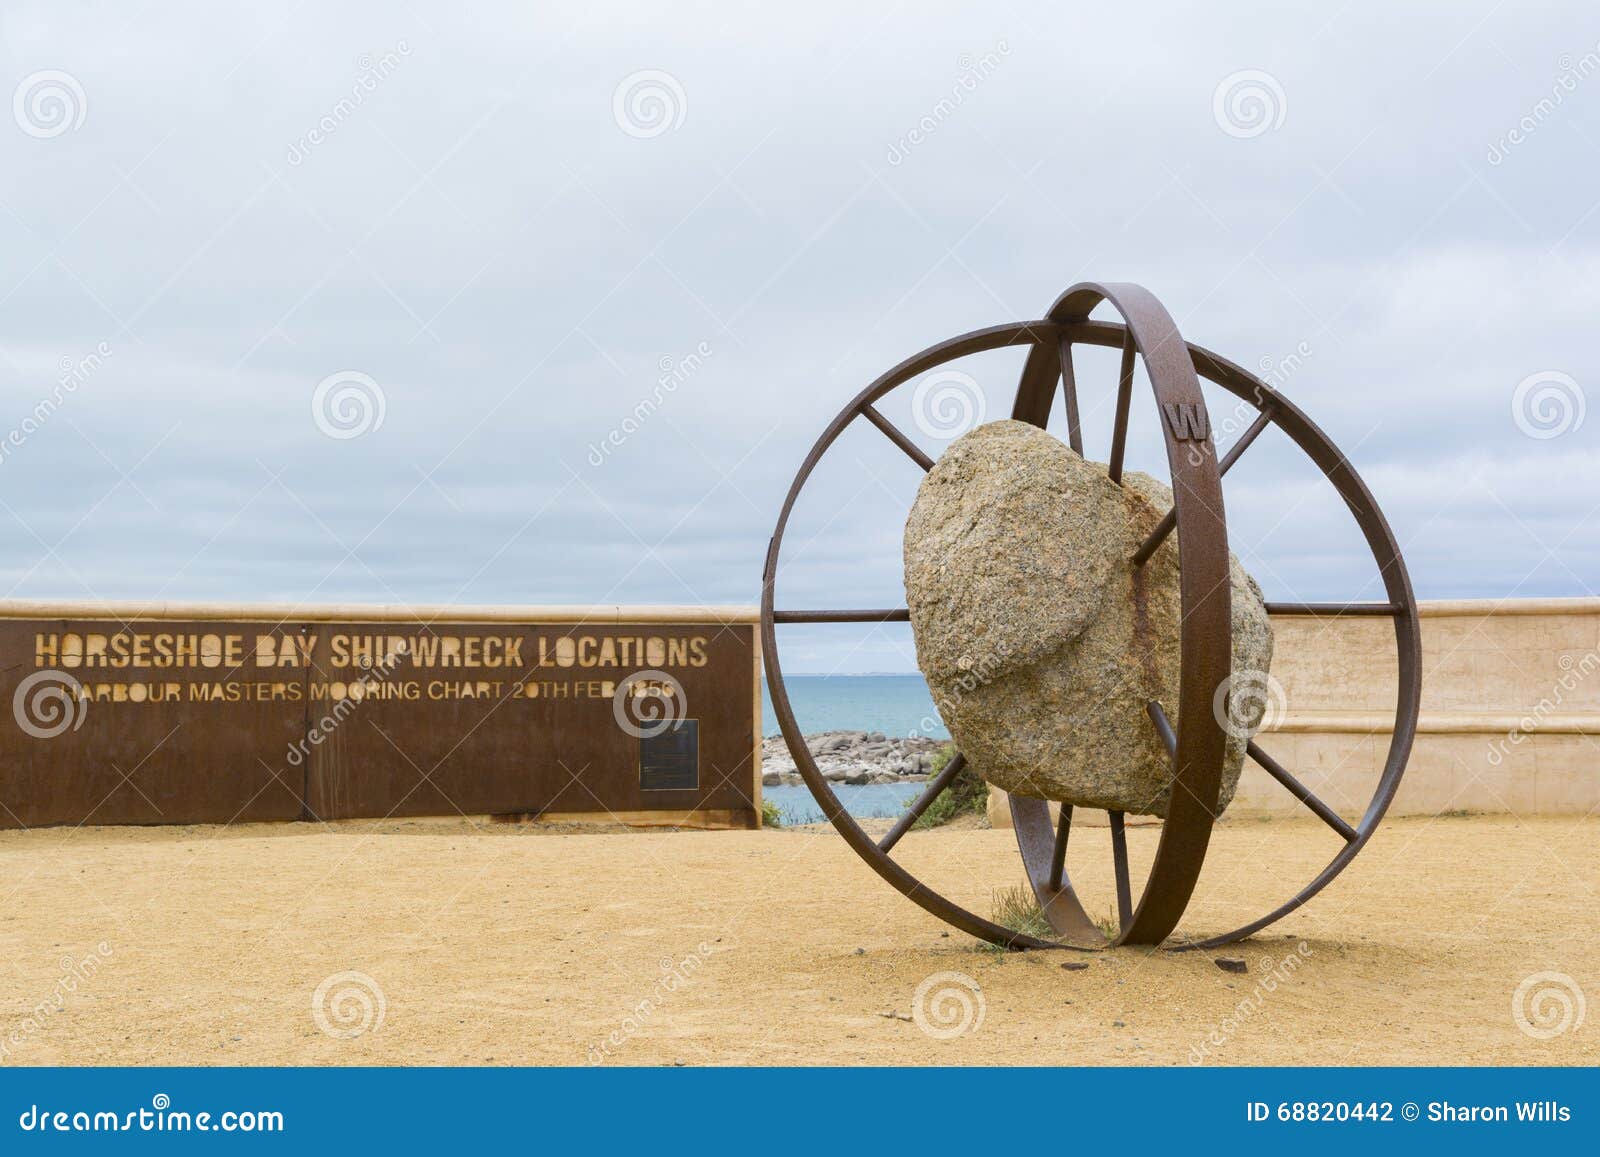 horseshoe bay shipwreck locations monument